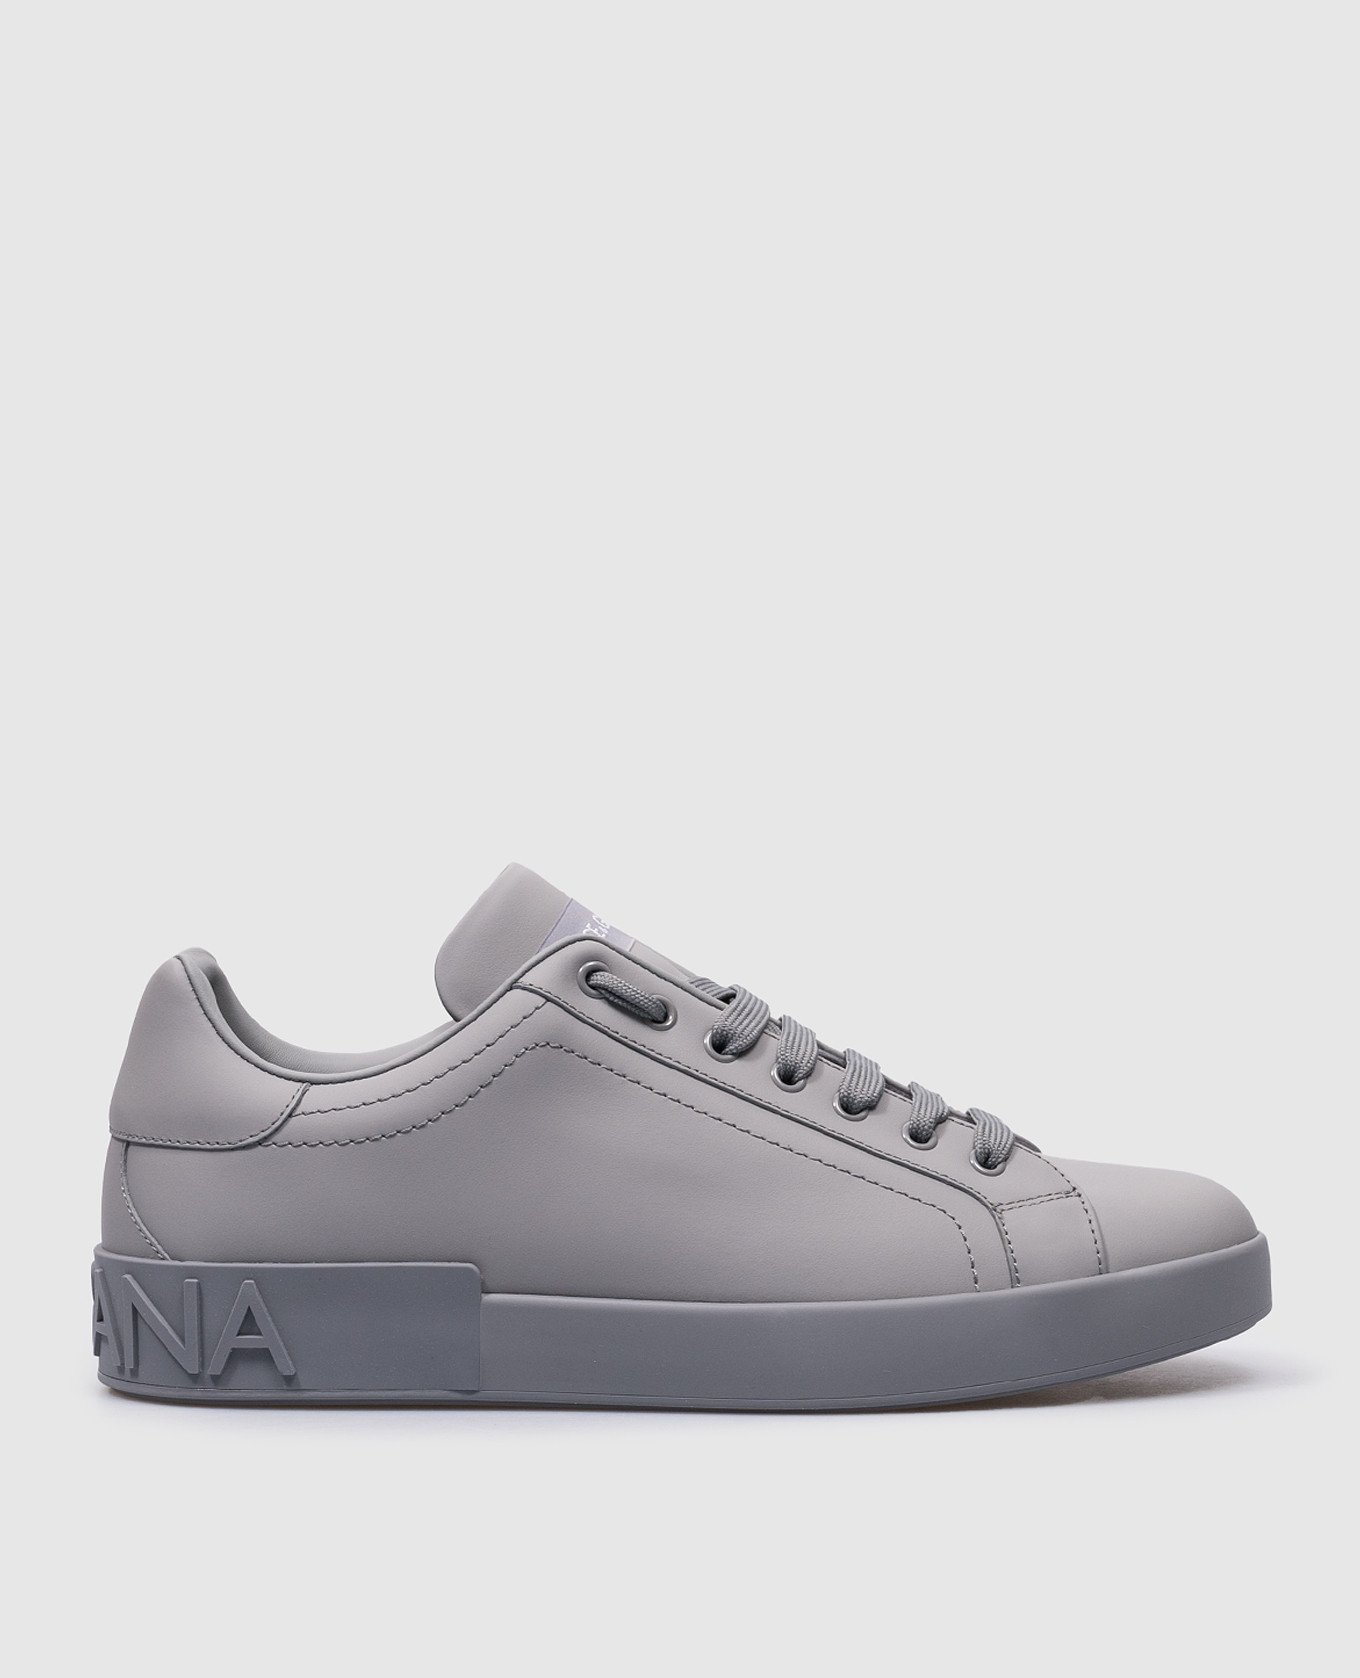 Portofino gray leather sneakers with logo